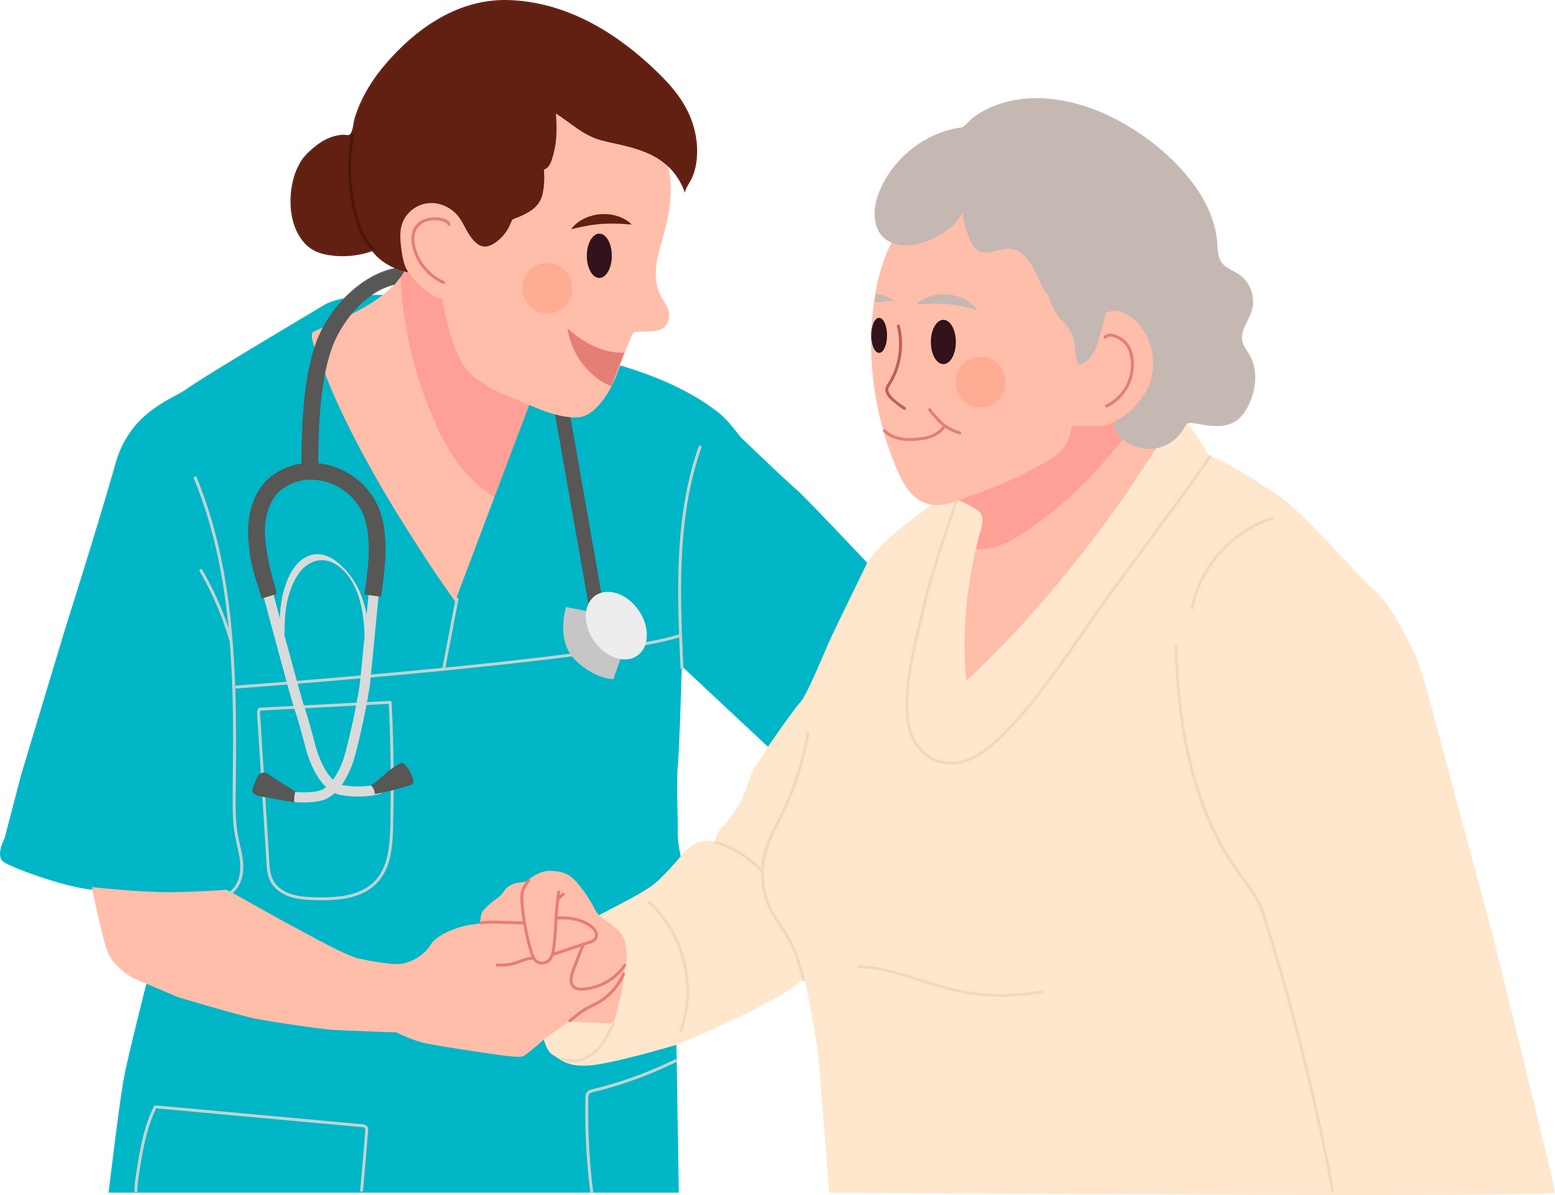 Nurse helping elderly woman patient.